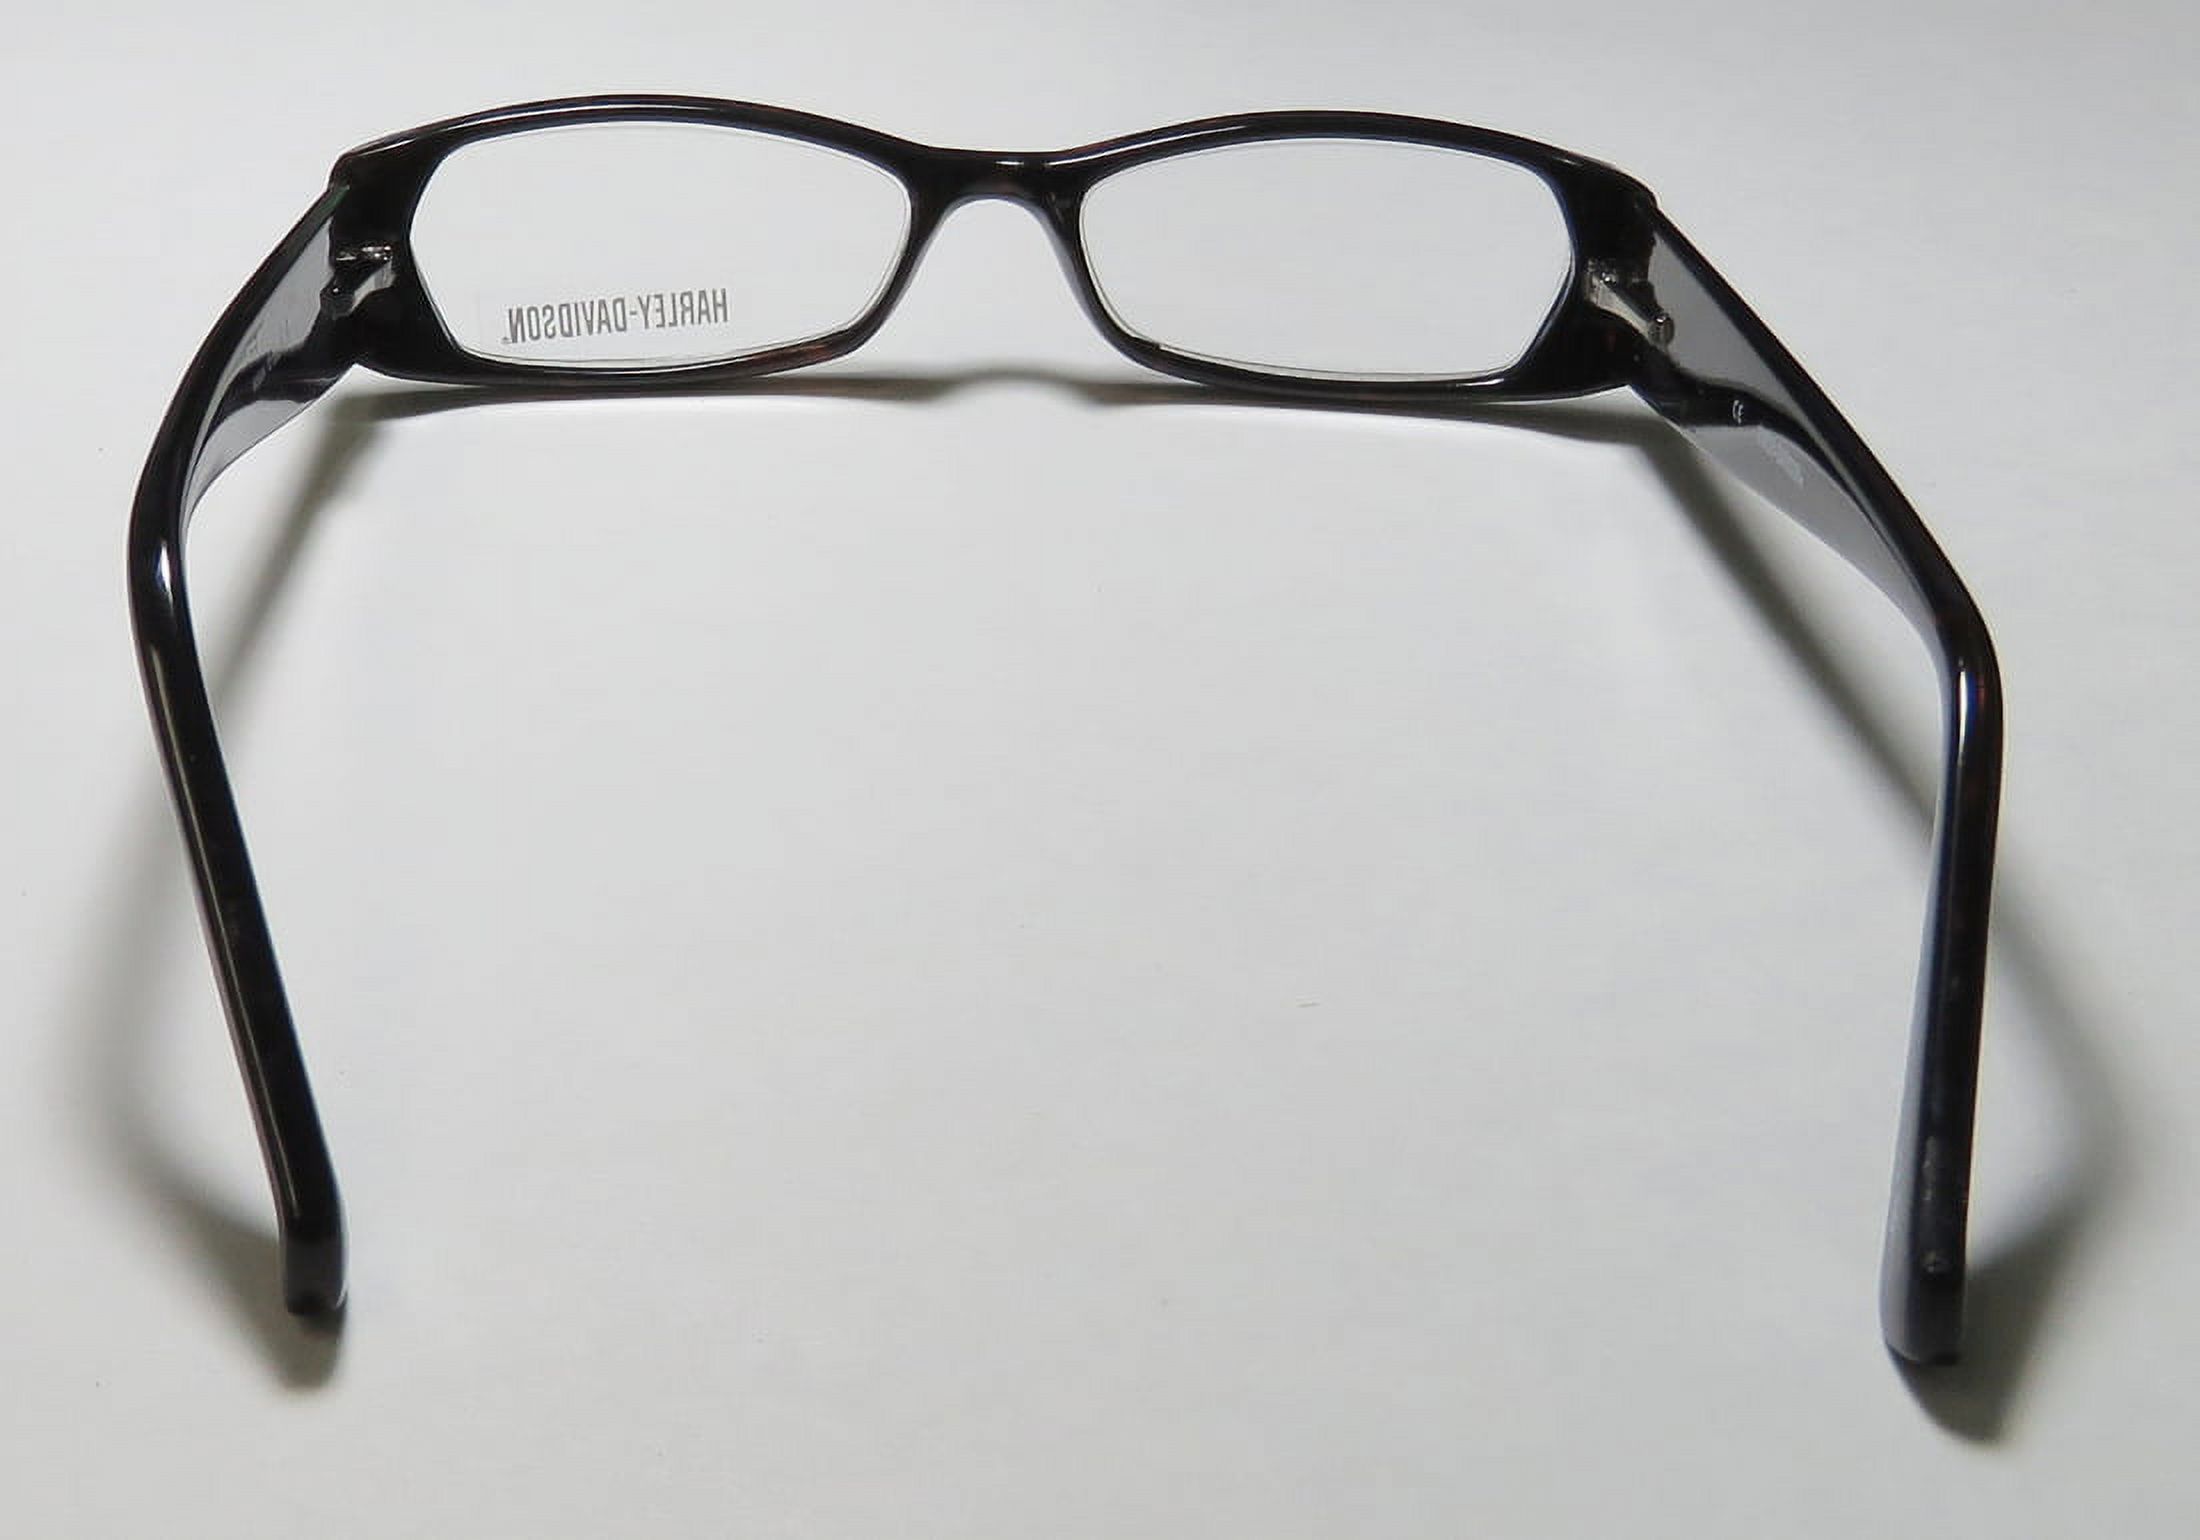 Harley Davidson  52-14-145 mm 2.50 Lenses Rectangular Reading Eyeglasses, Dark Brown - image 5 of 9